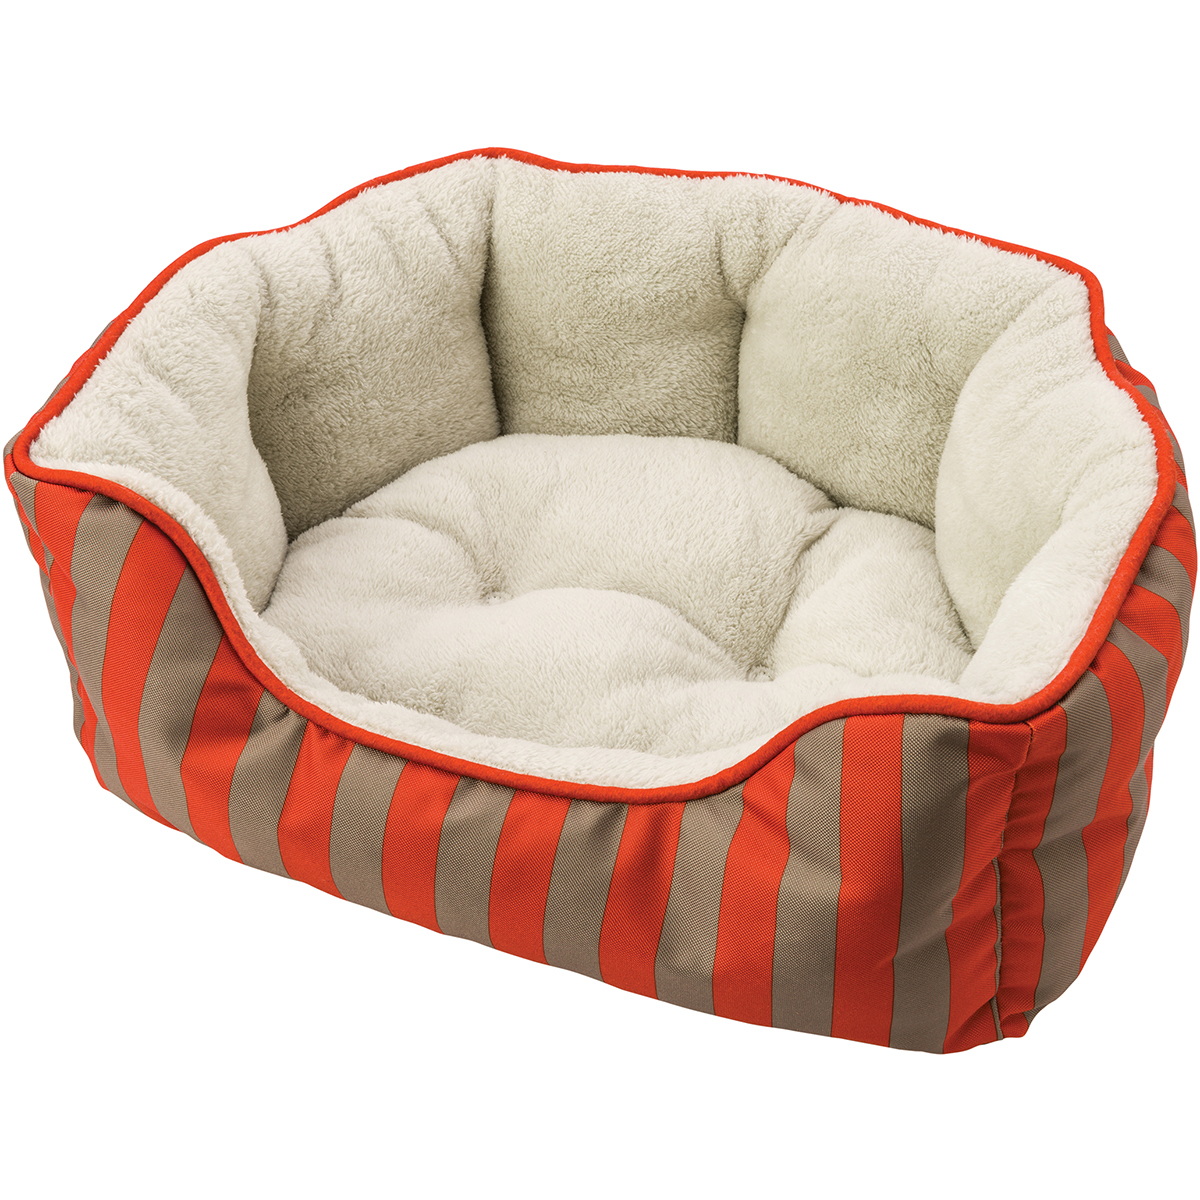 31002 24 In. Cabana Step In Scallop Shape Dog Bed, Orange